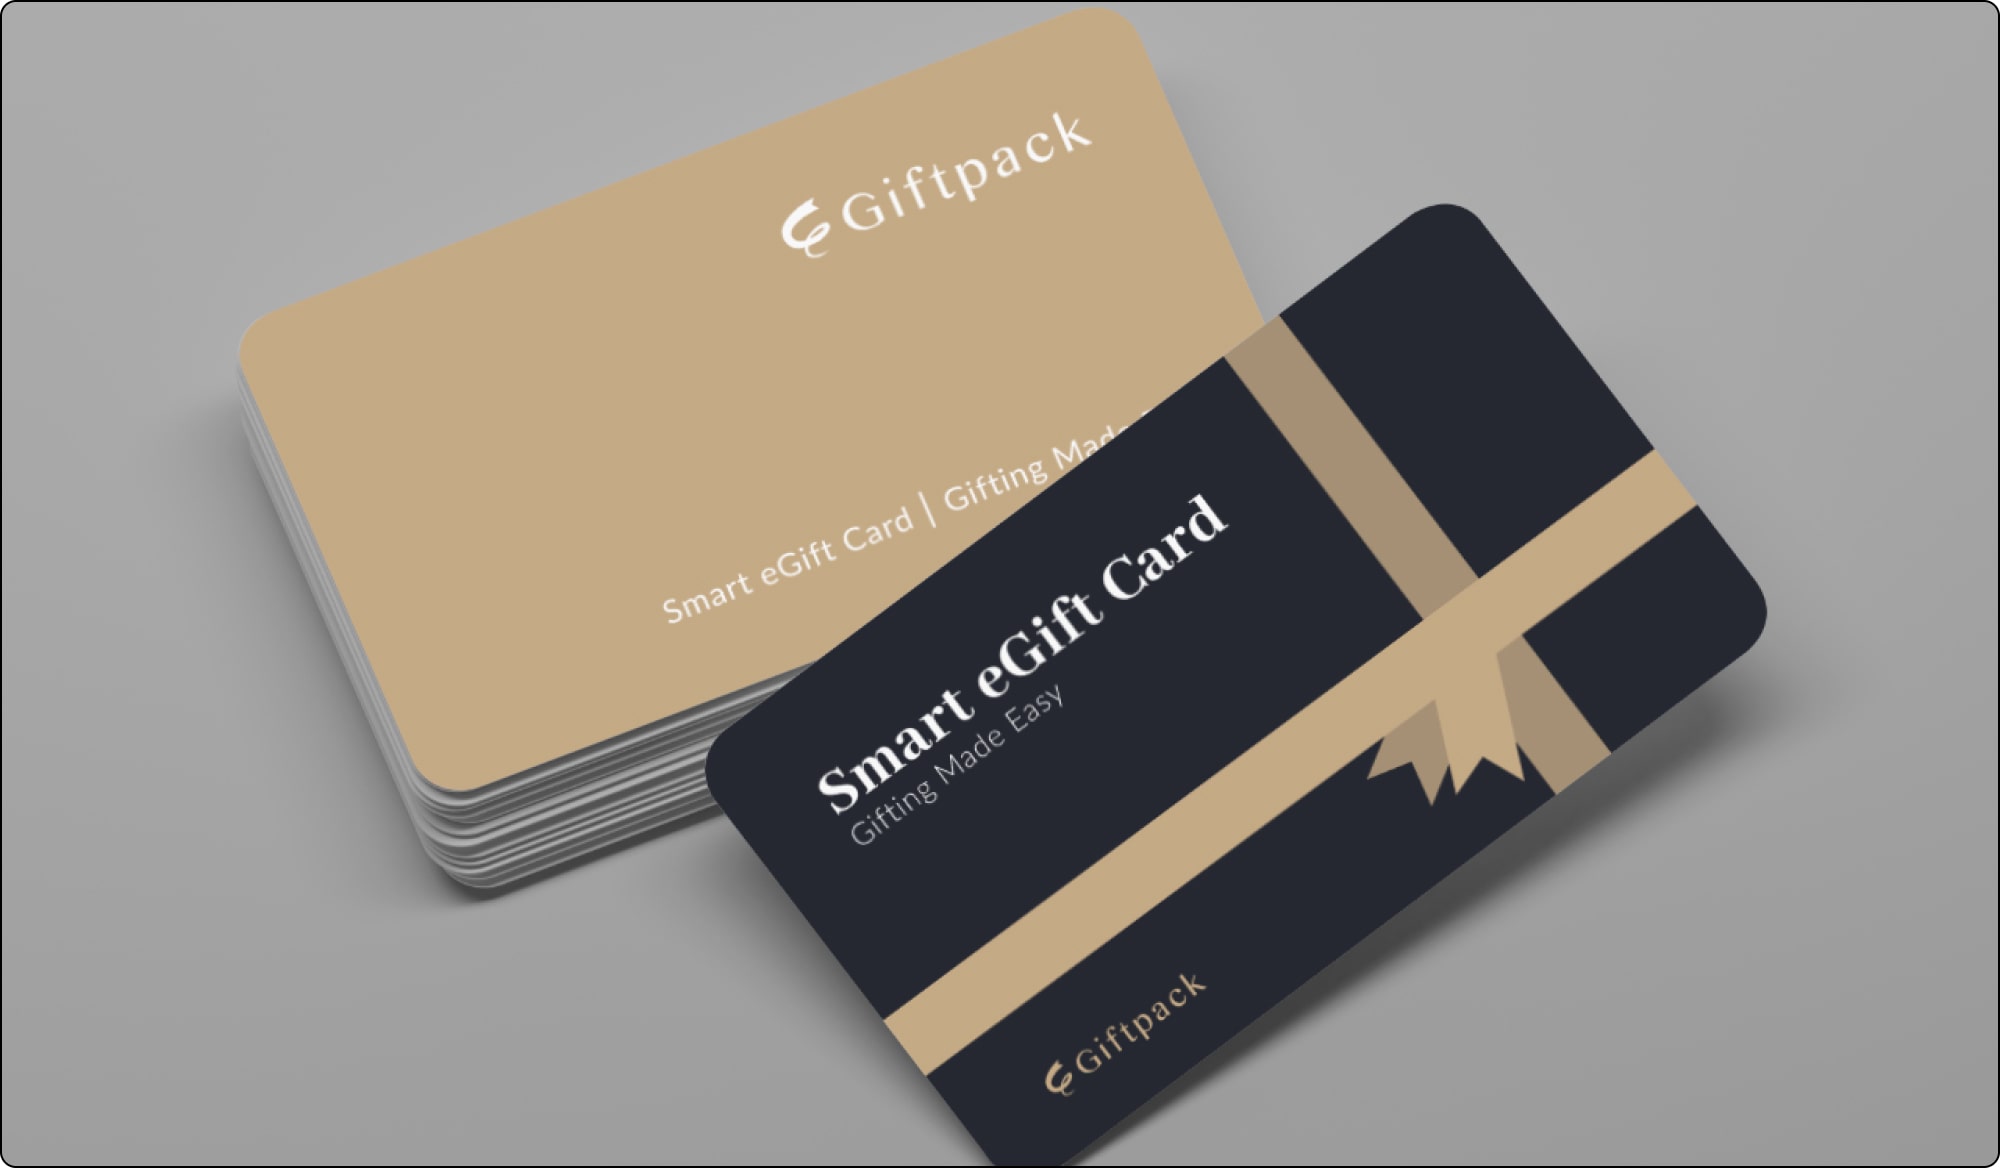 giftpack smart egift card for 350 brands for branded employee gifts